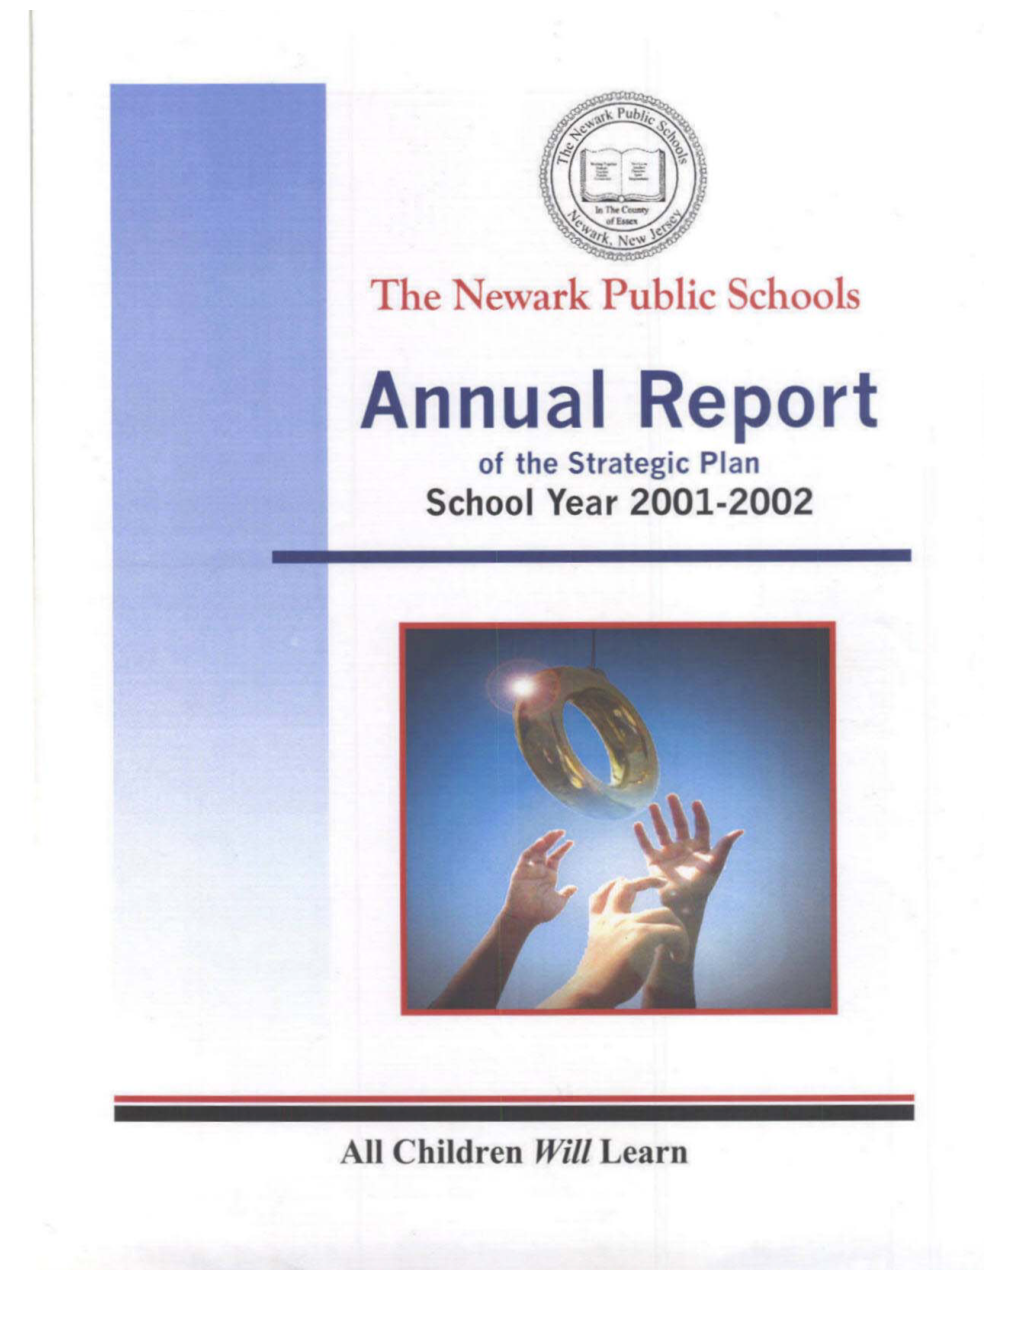 The Newark Public Schools Annual Report of the Strategic Plan, School Year 2001-2002